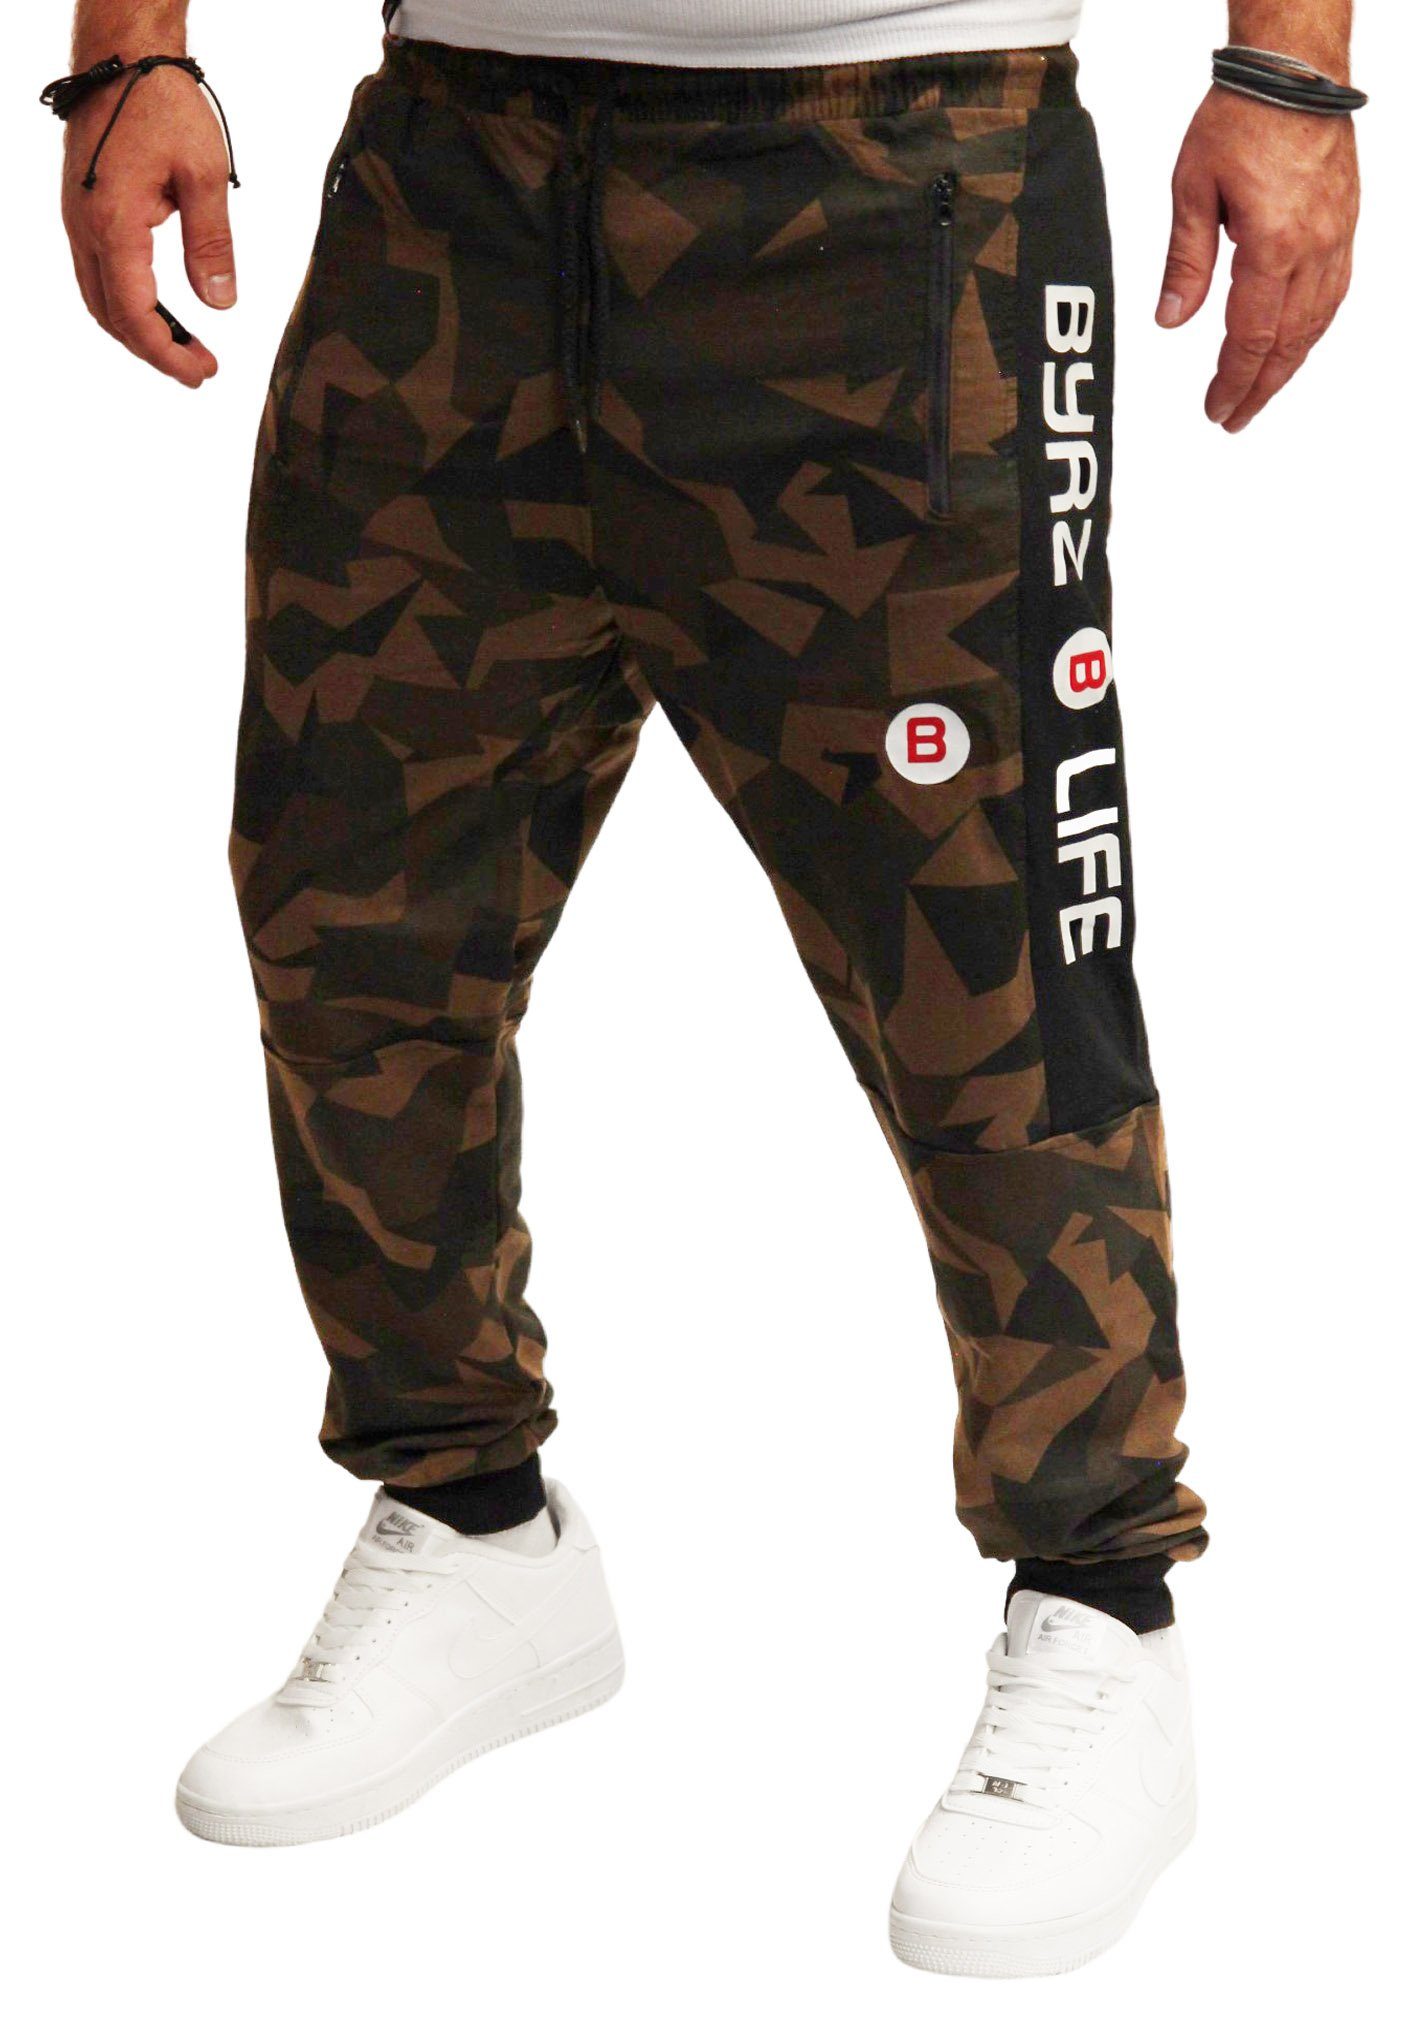 RMK Jogginghose Herren Trainingshose Camouflage Fitnesshose Tarn Army Camouflage (H.12) Sport Hose